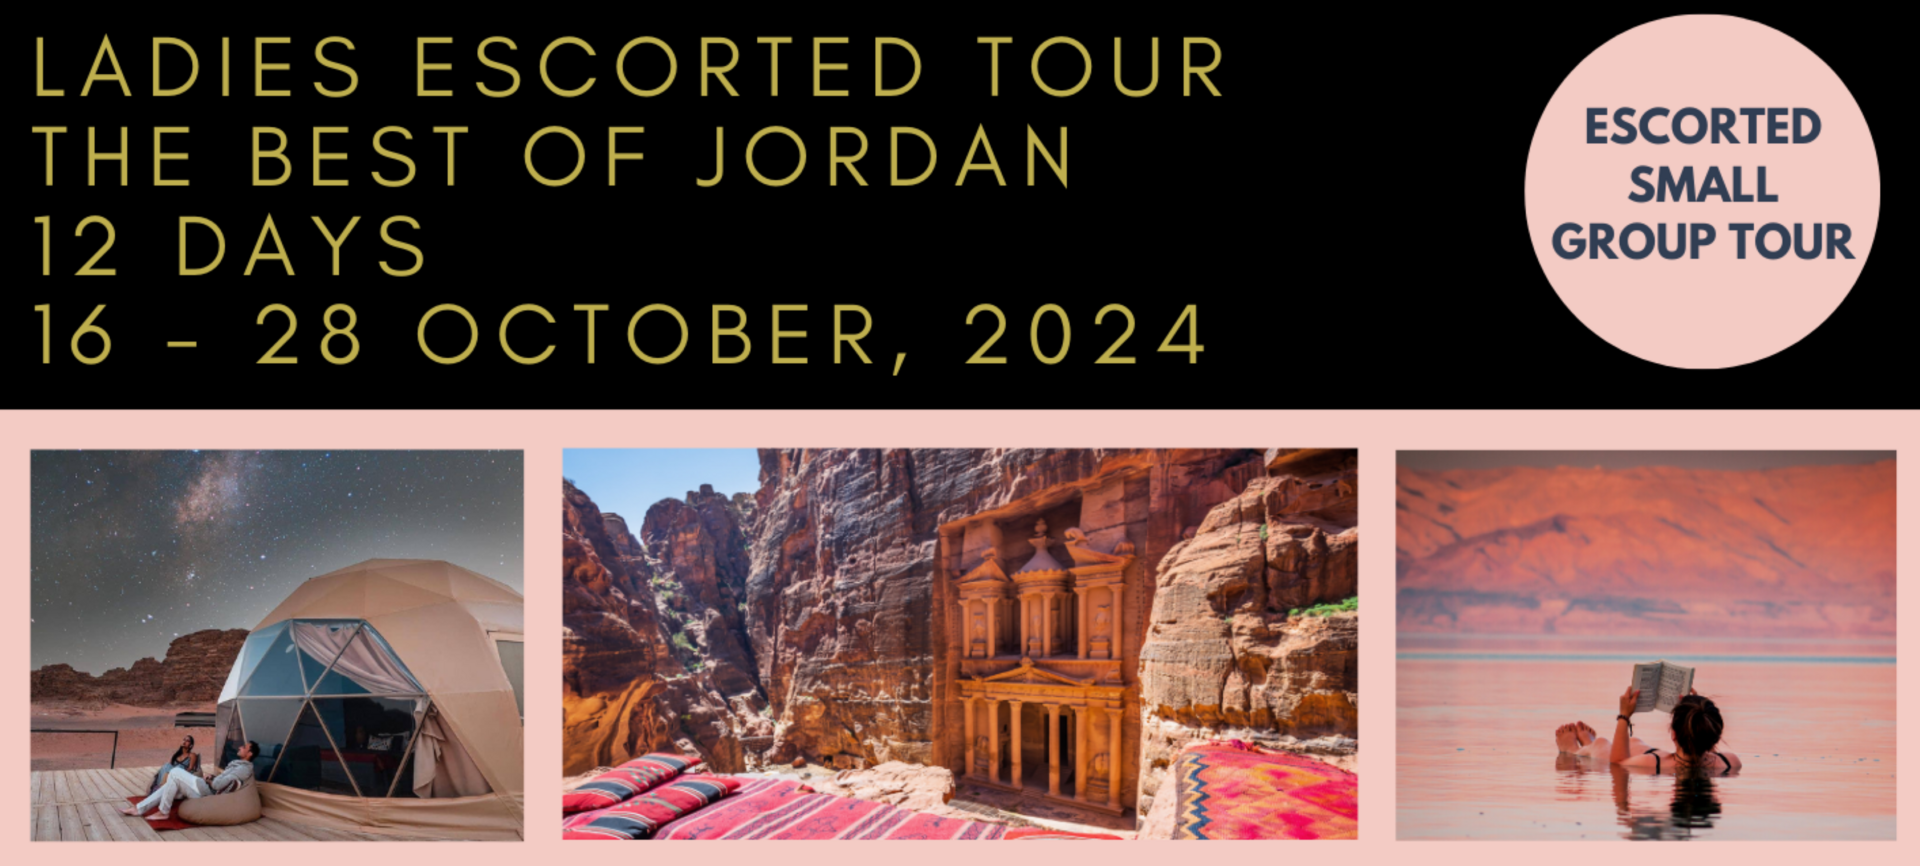 The Best of Jordan